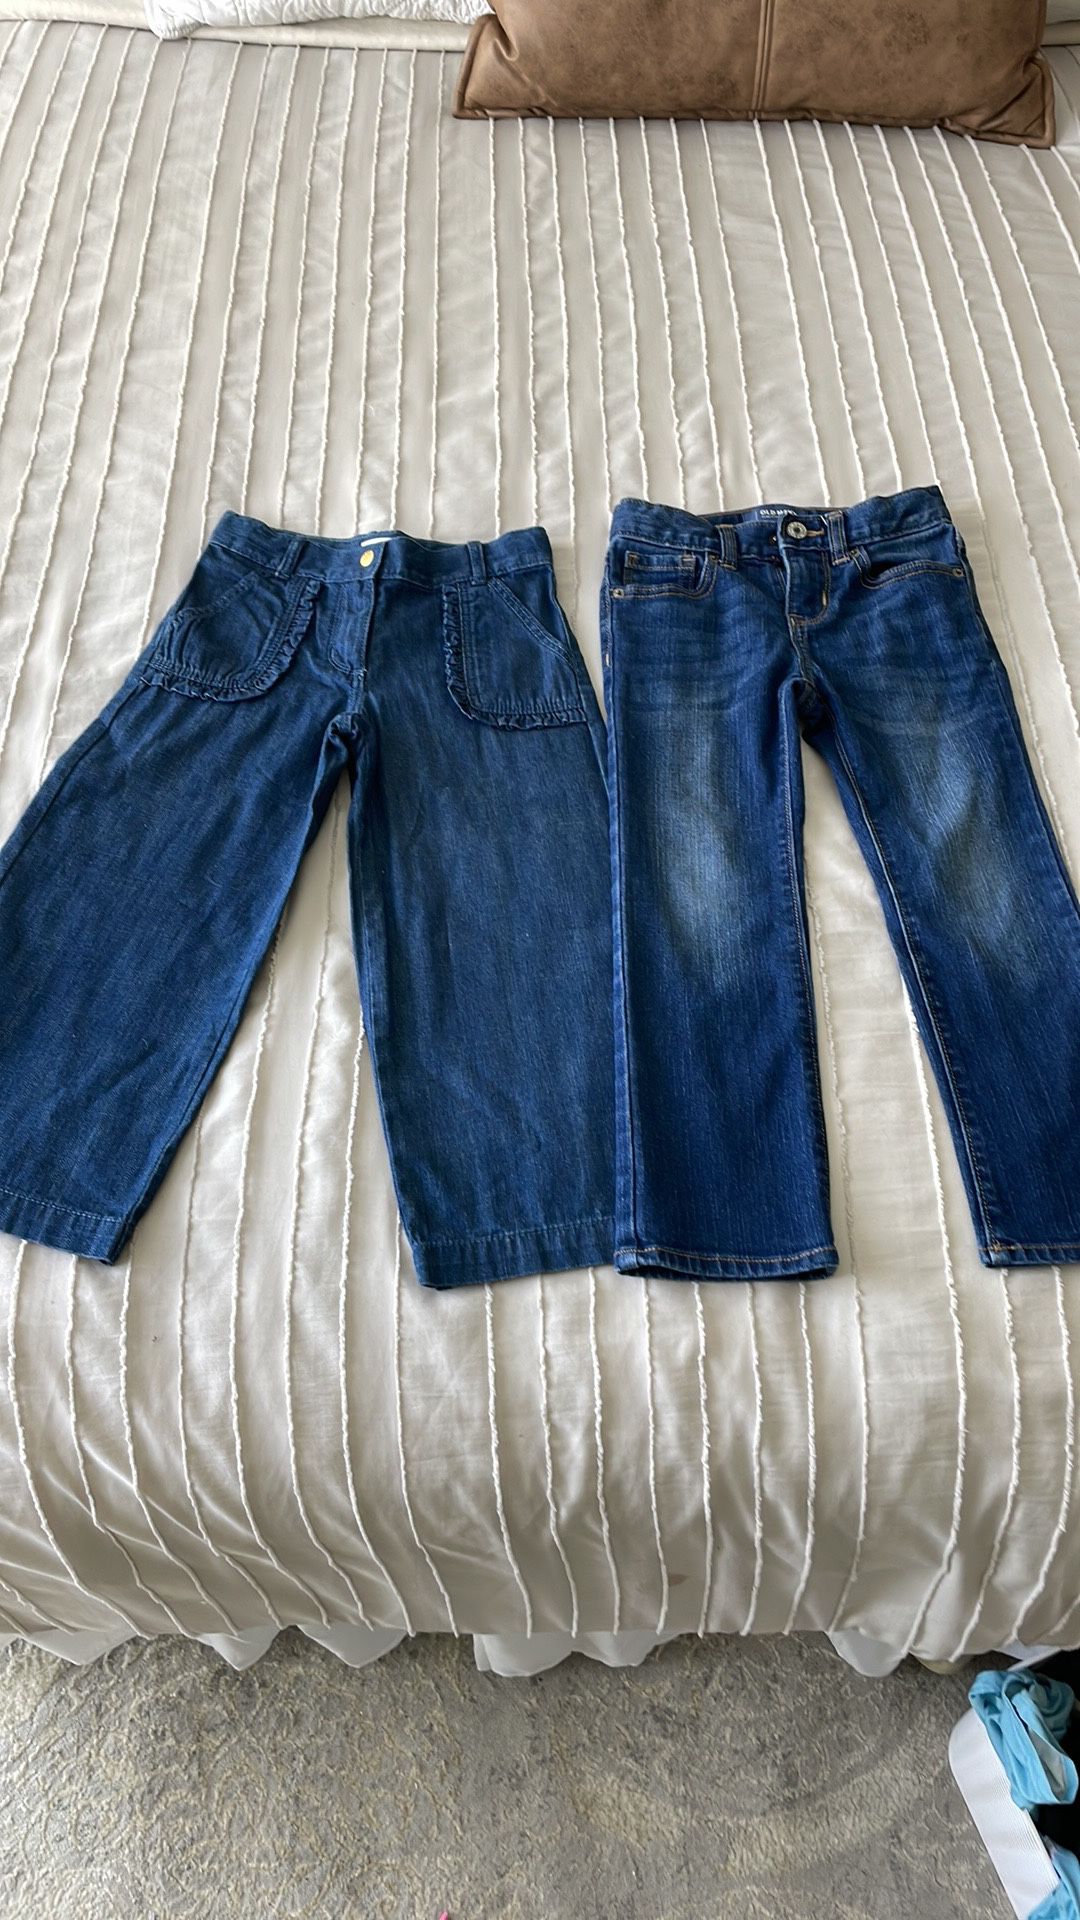 Bundle Jeans For Toddler Girl Size 5/6